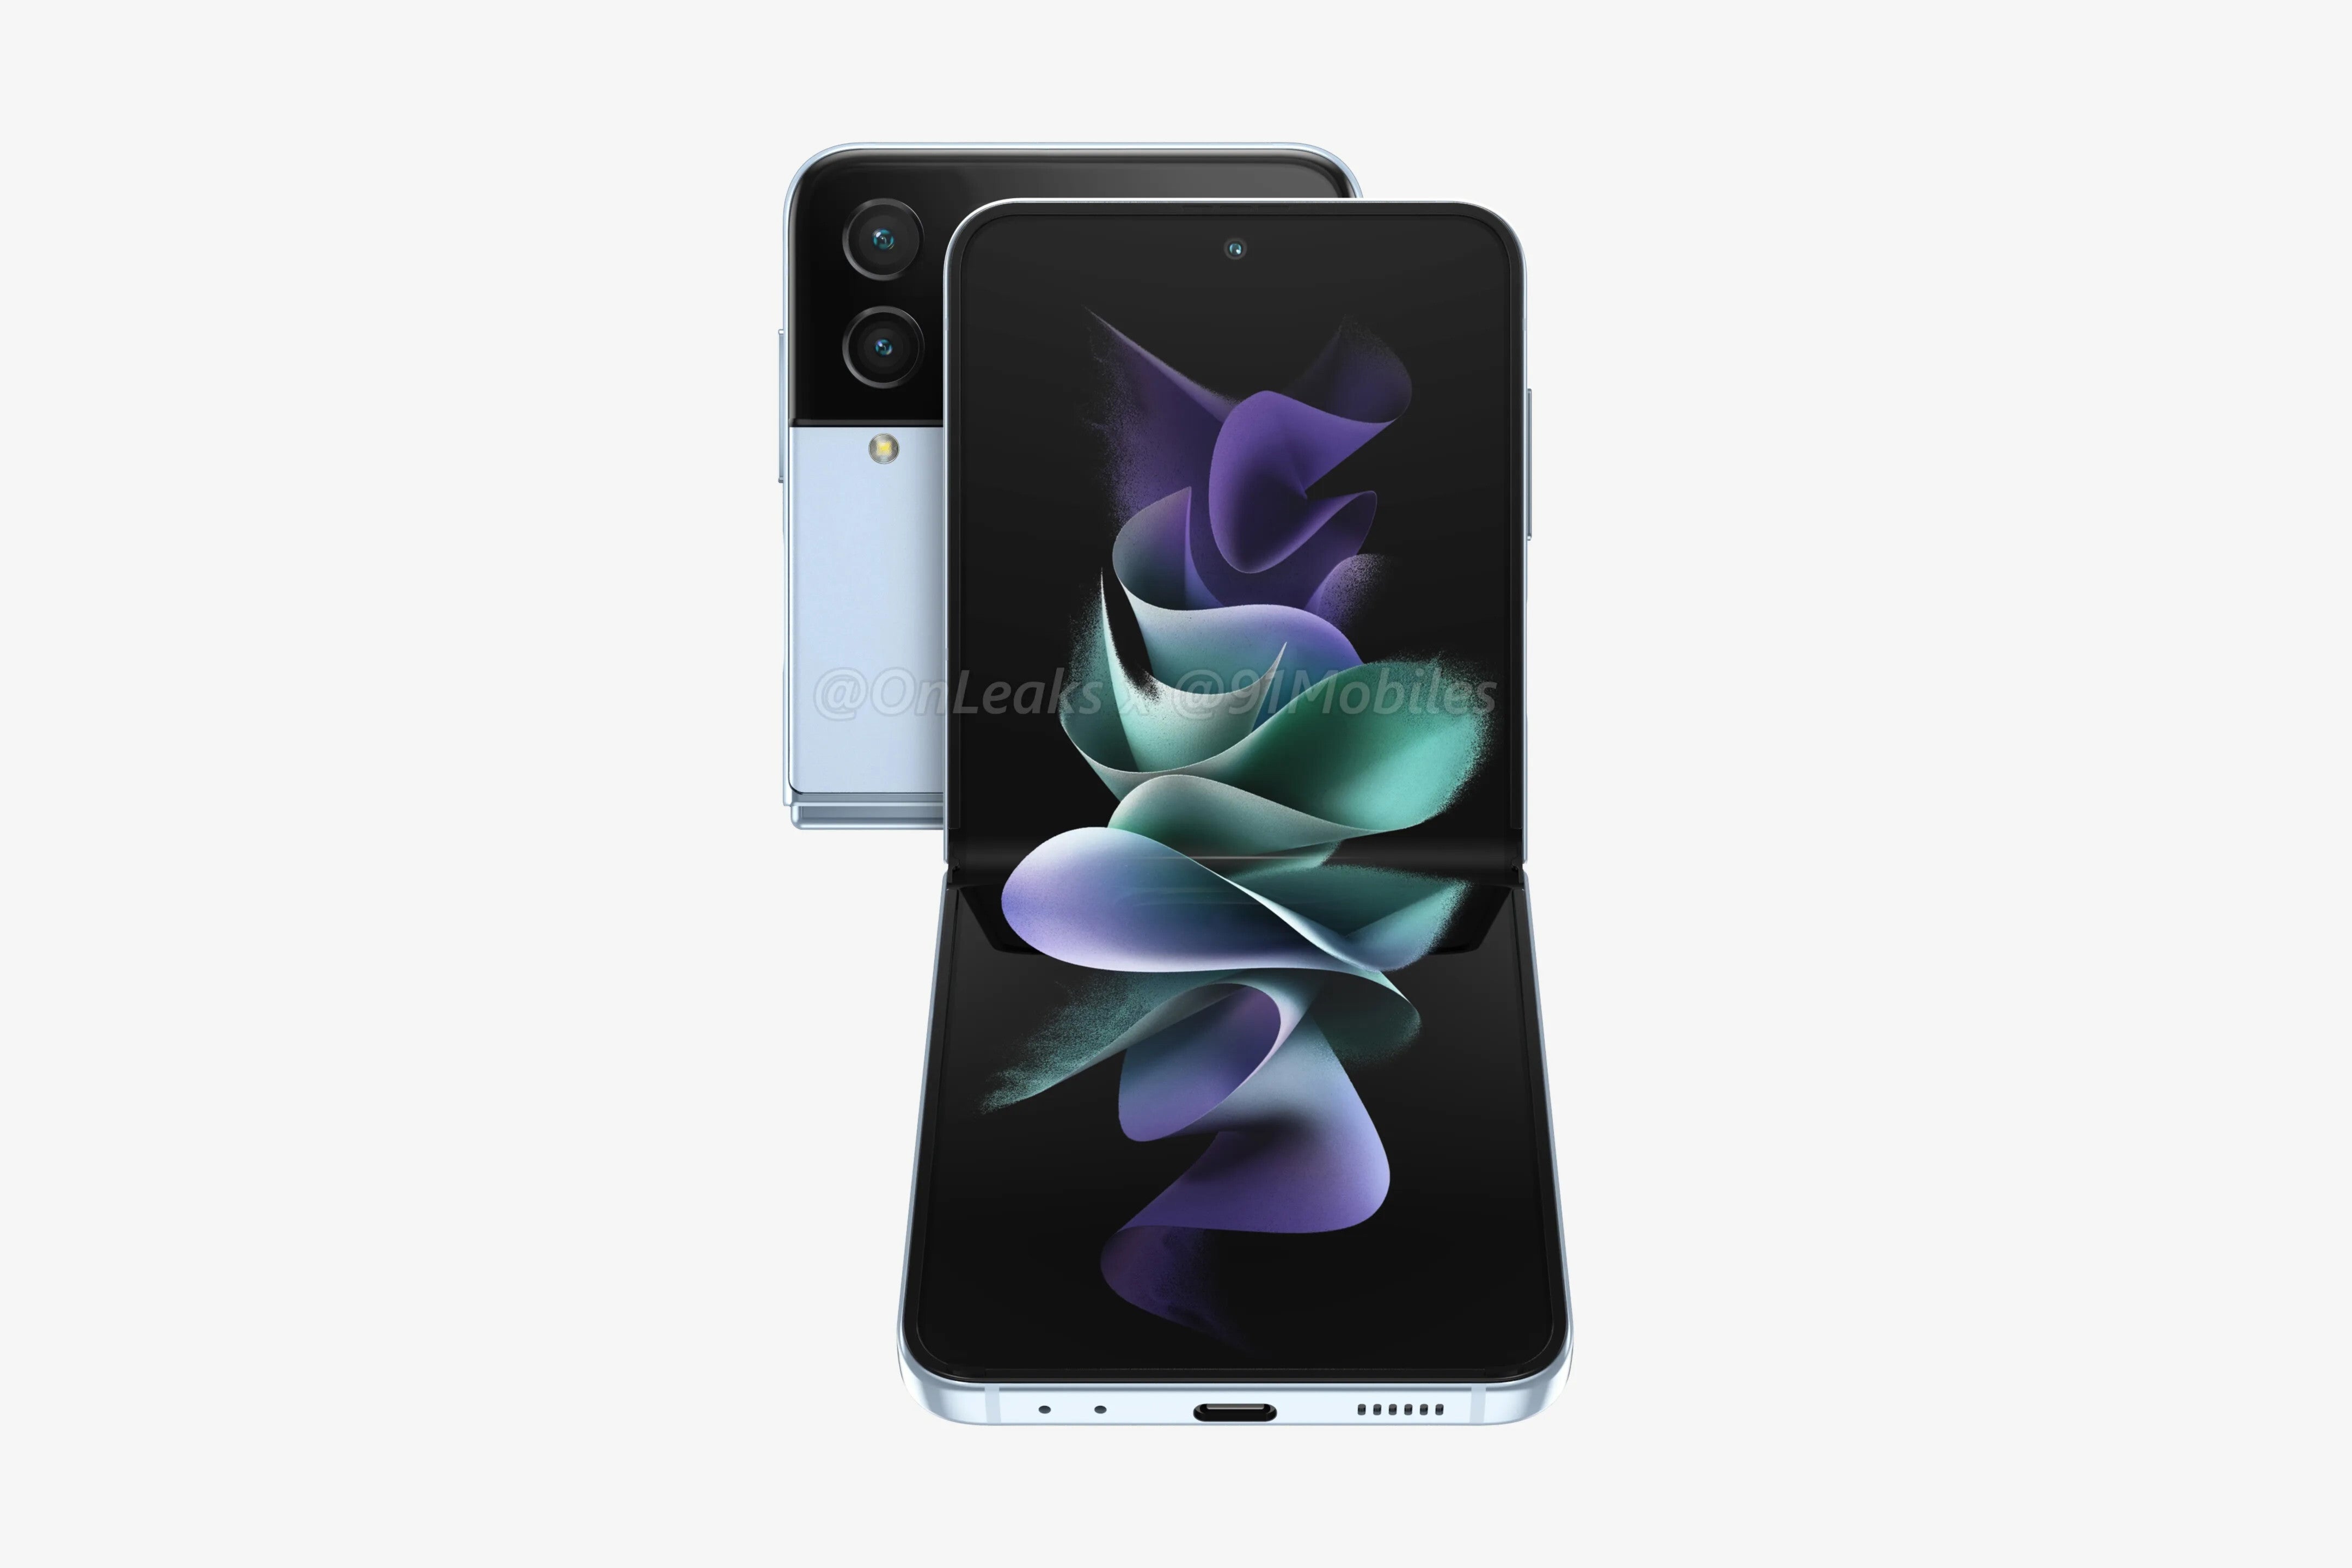 Huge Samsung Galaxy Z Flip 4 leak shows very familiar design